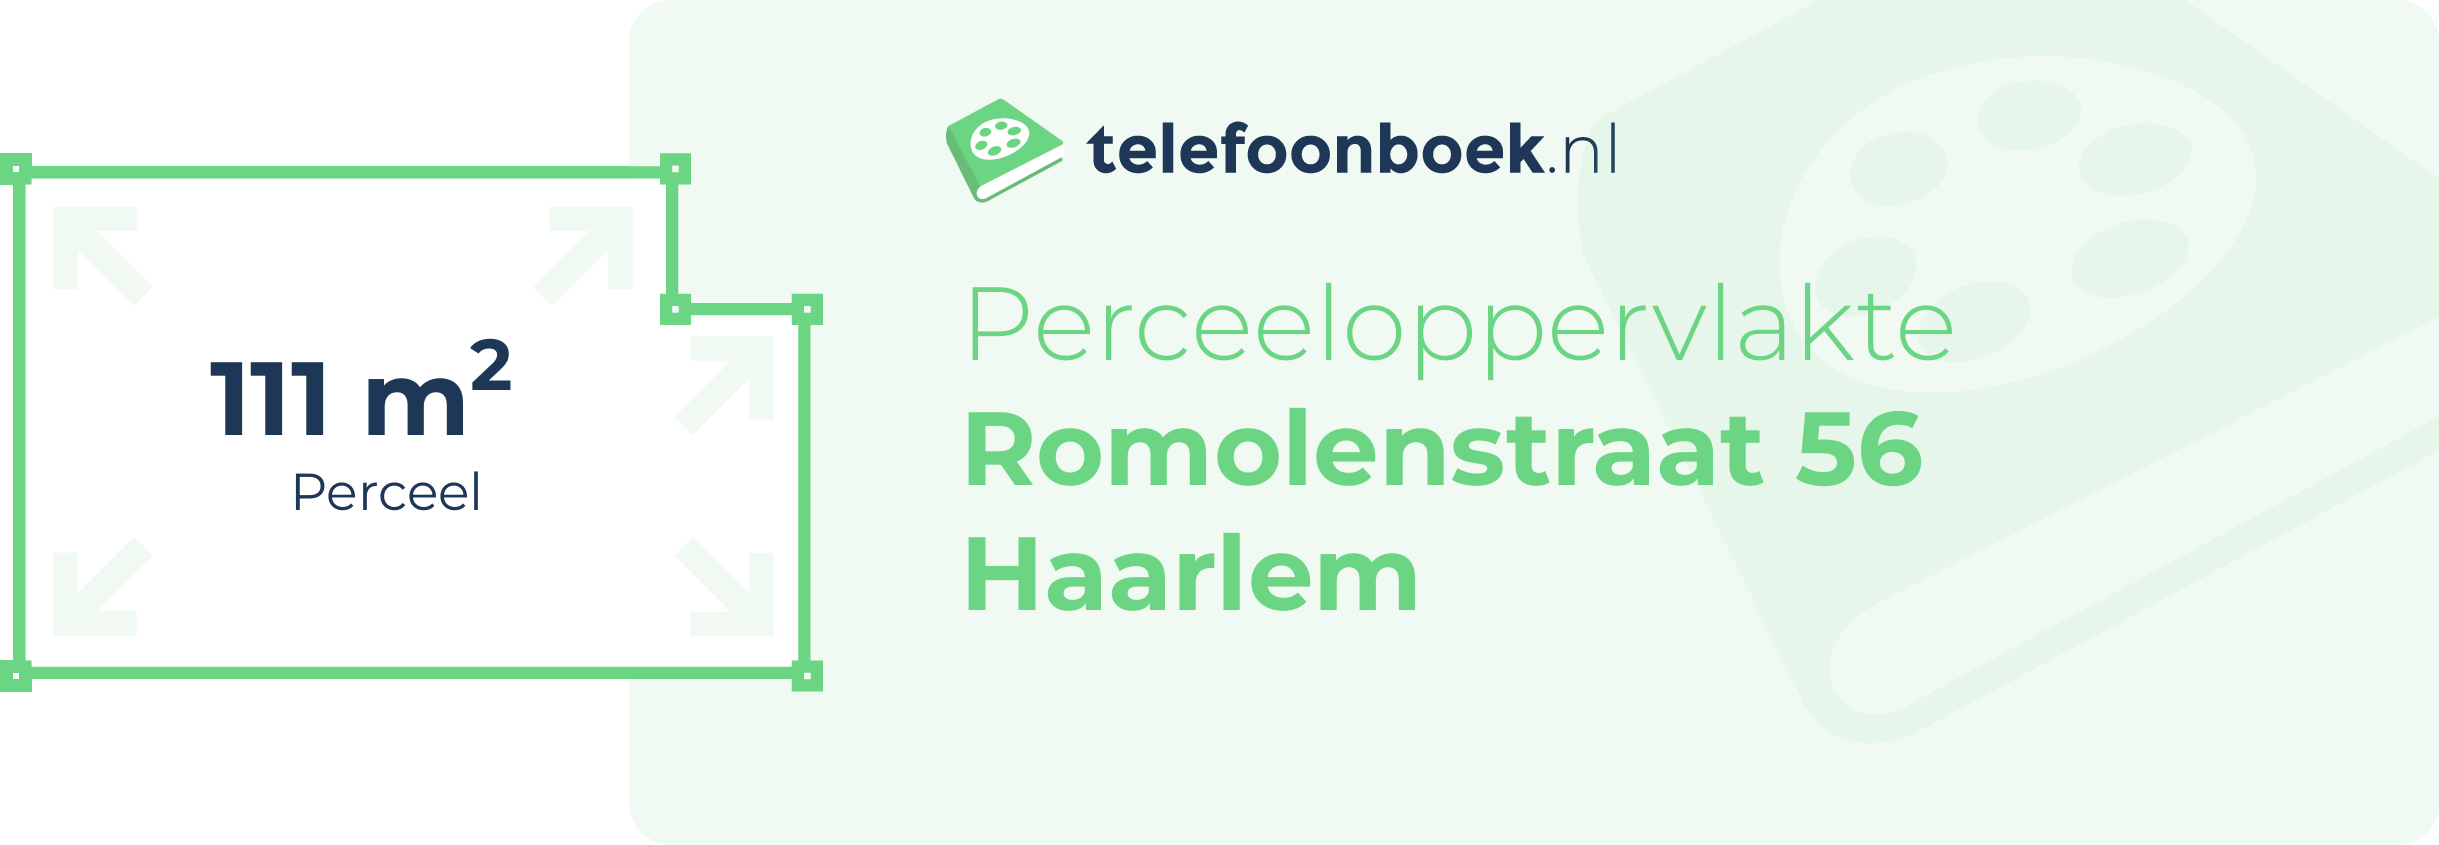 Perceeloppervlakte Romolenstraat 56 Haarlem